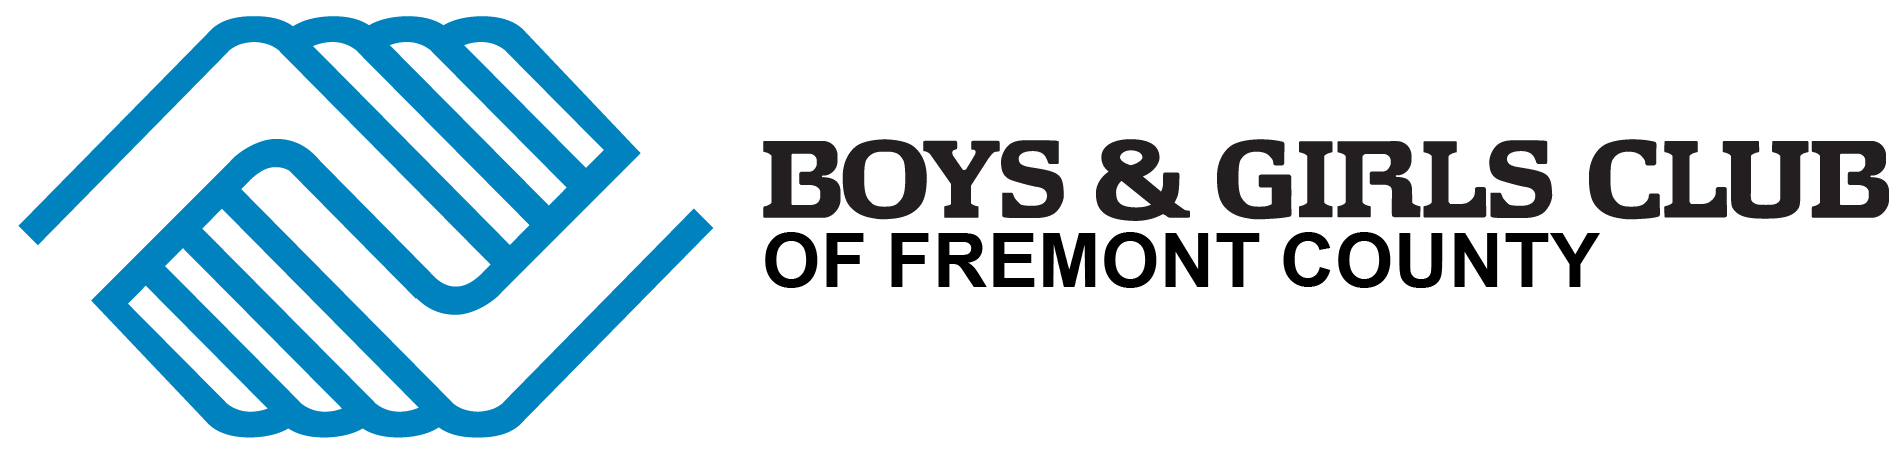 Boys & Girls Club of Fremont County logo